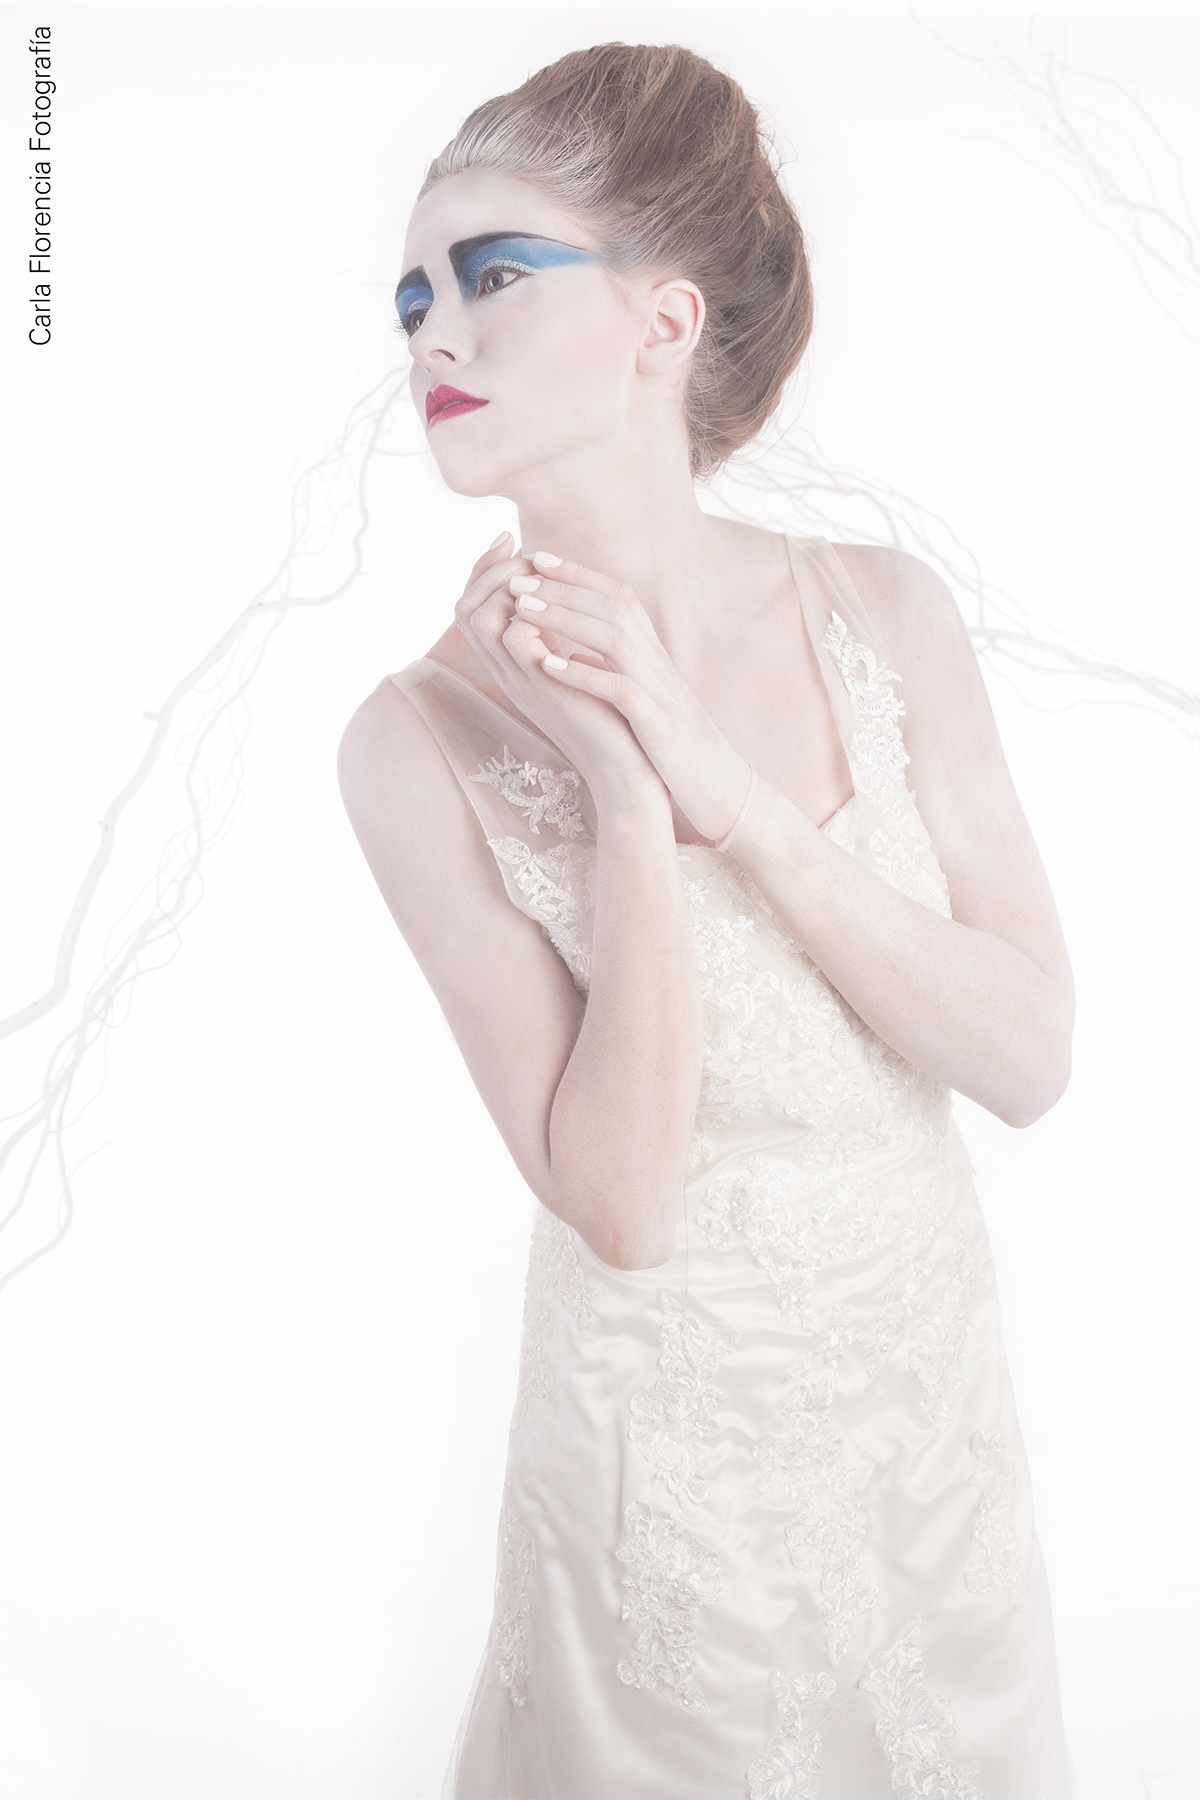 moda modelo snow white queen Reina de las nieves nieve blanco estudio Fotografia camara Flash